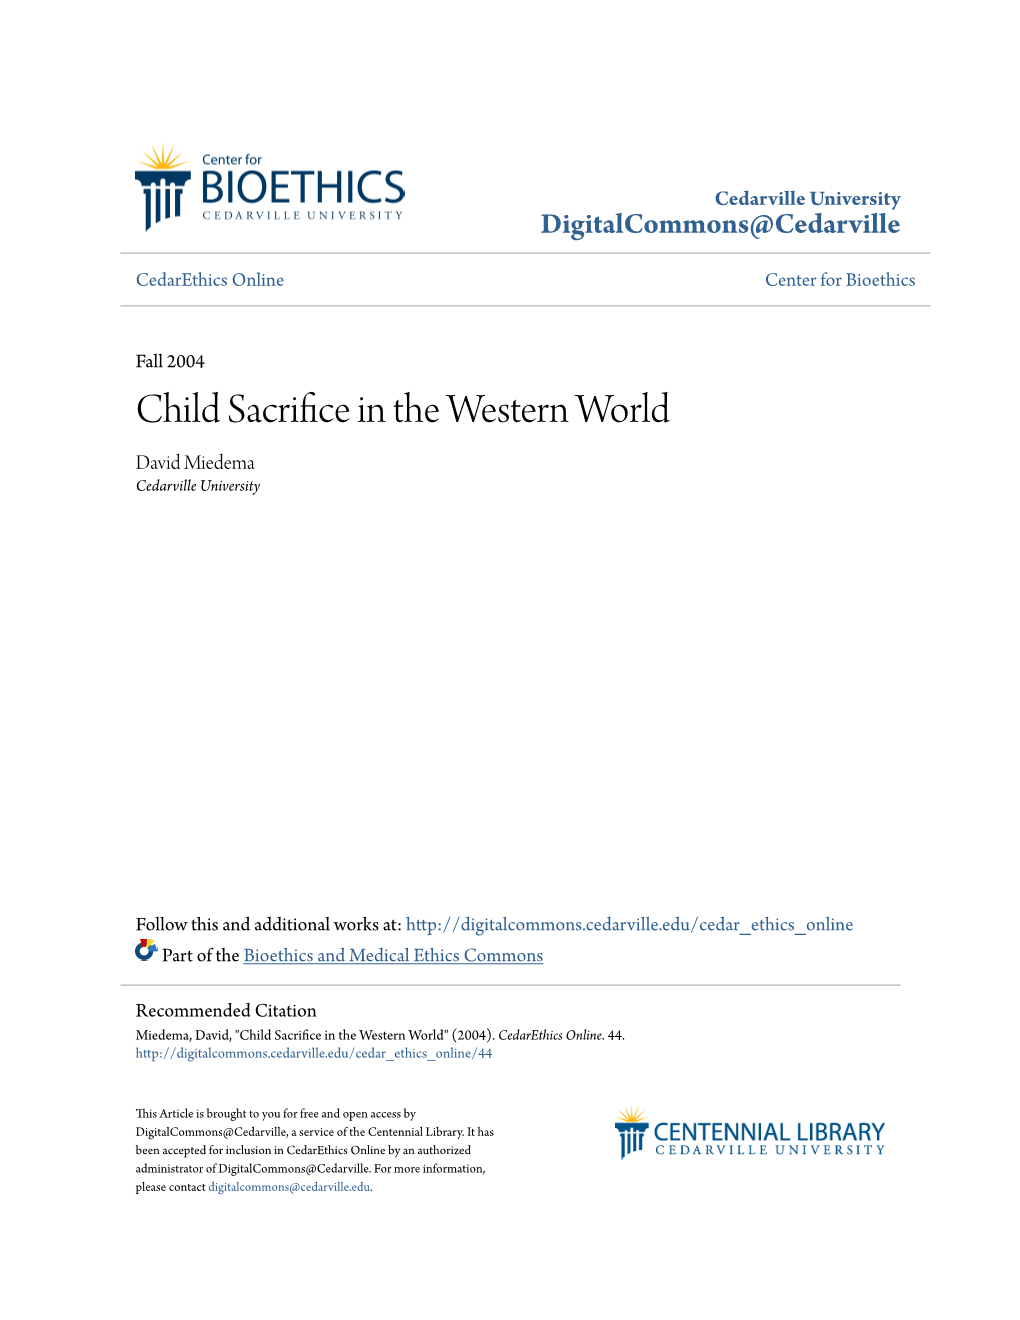 Child Sacrifice in the Western World" (2004)